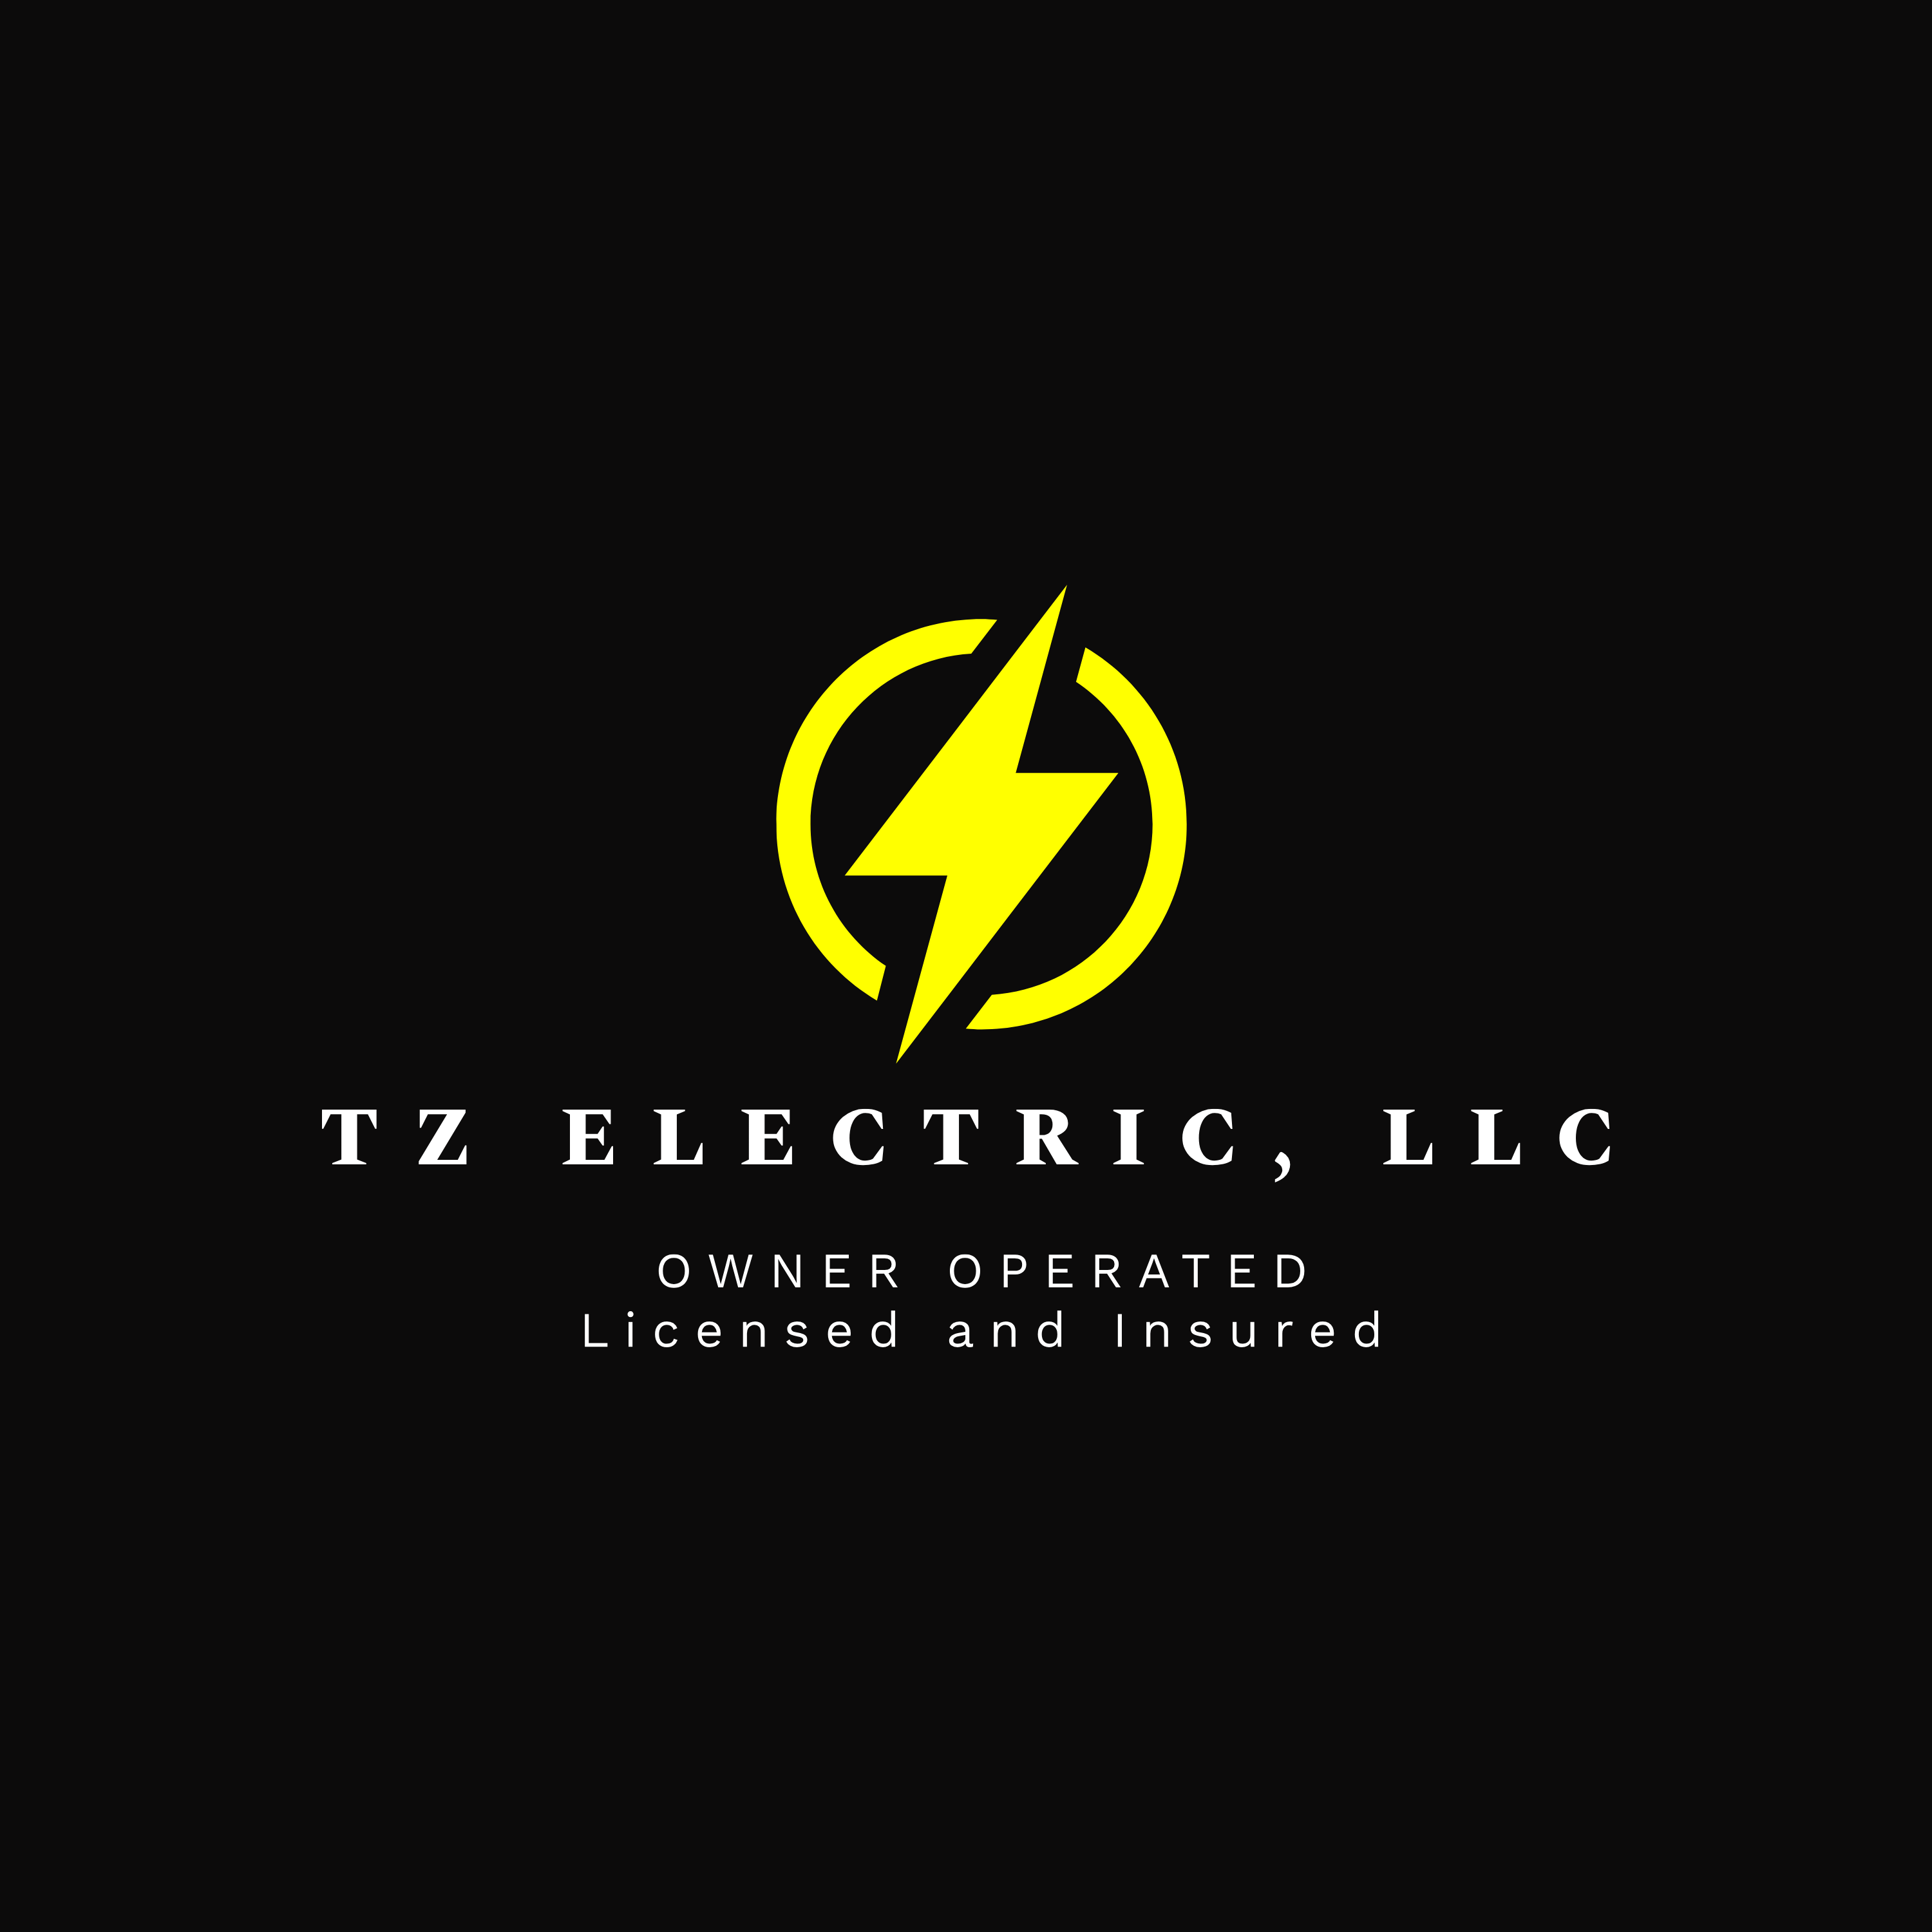 TZ ELECTRIC, LLC Logo